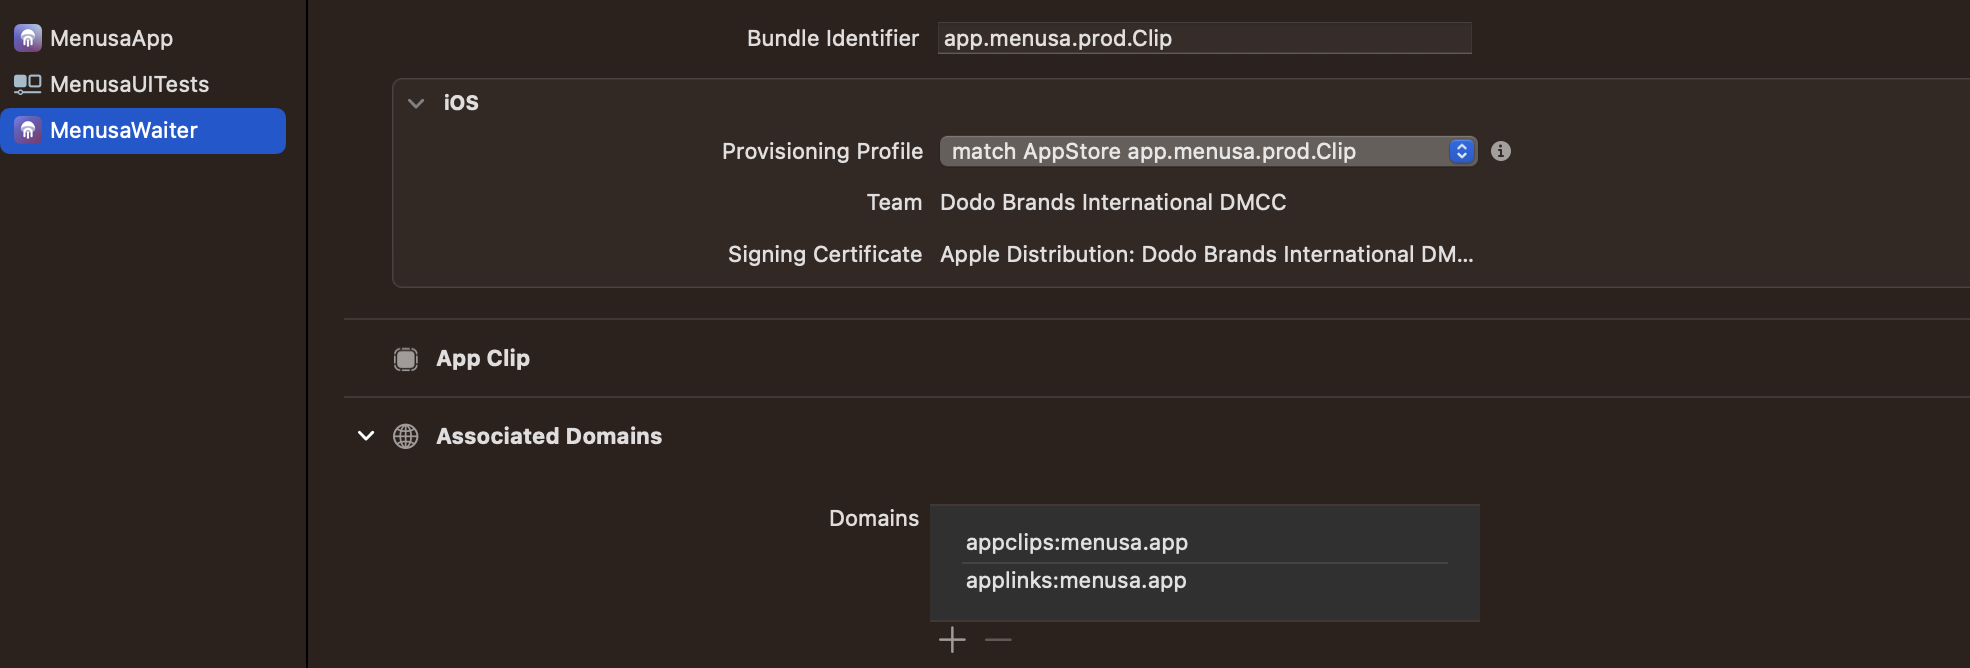 App Clips Overview - Apple Developer